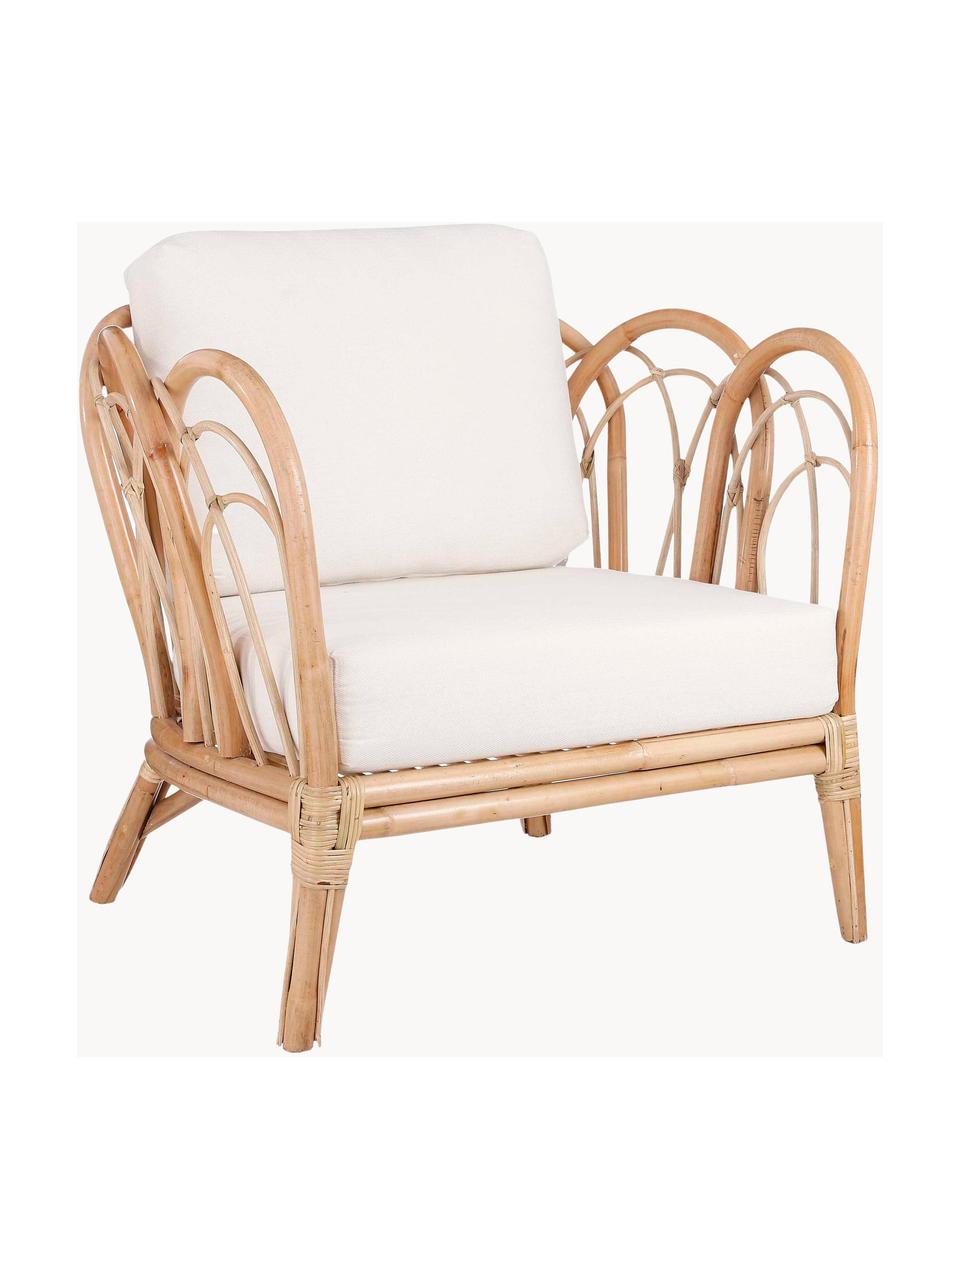 Rotan stoel Sherbrooke met kussen, Lichtbruin, wit, B 83 x D 72 cm